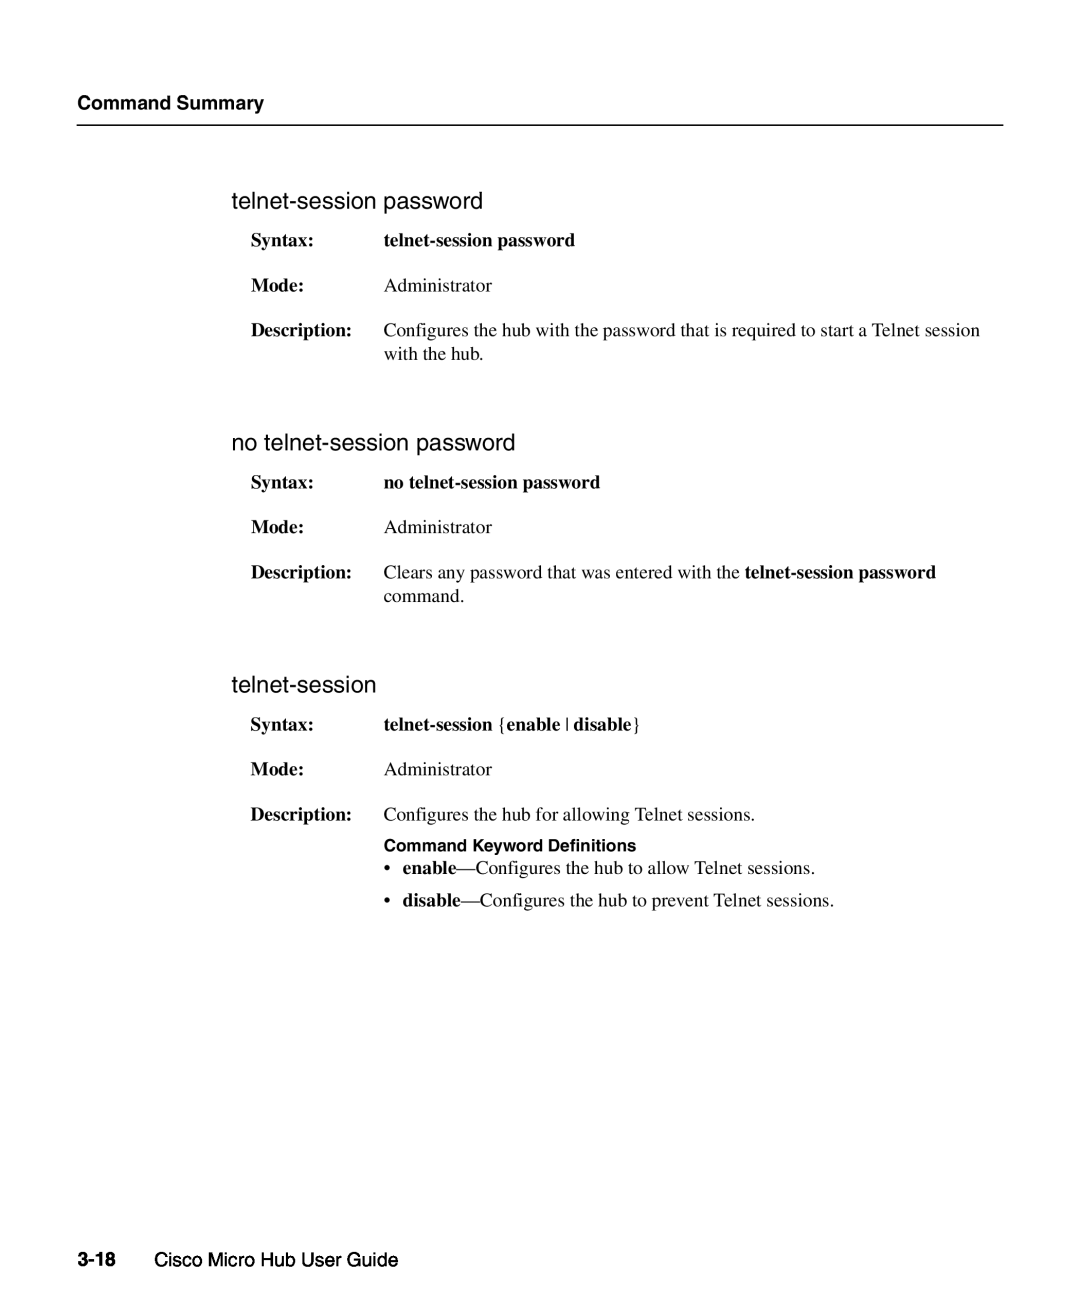 Cisco Systems 1503 manual no telnet-session password, Command Summary, Cisco Micro Hub User Guide 